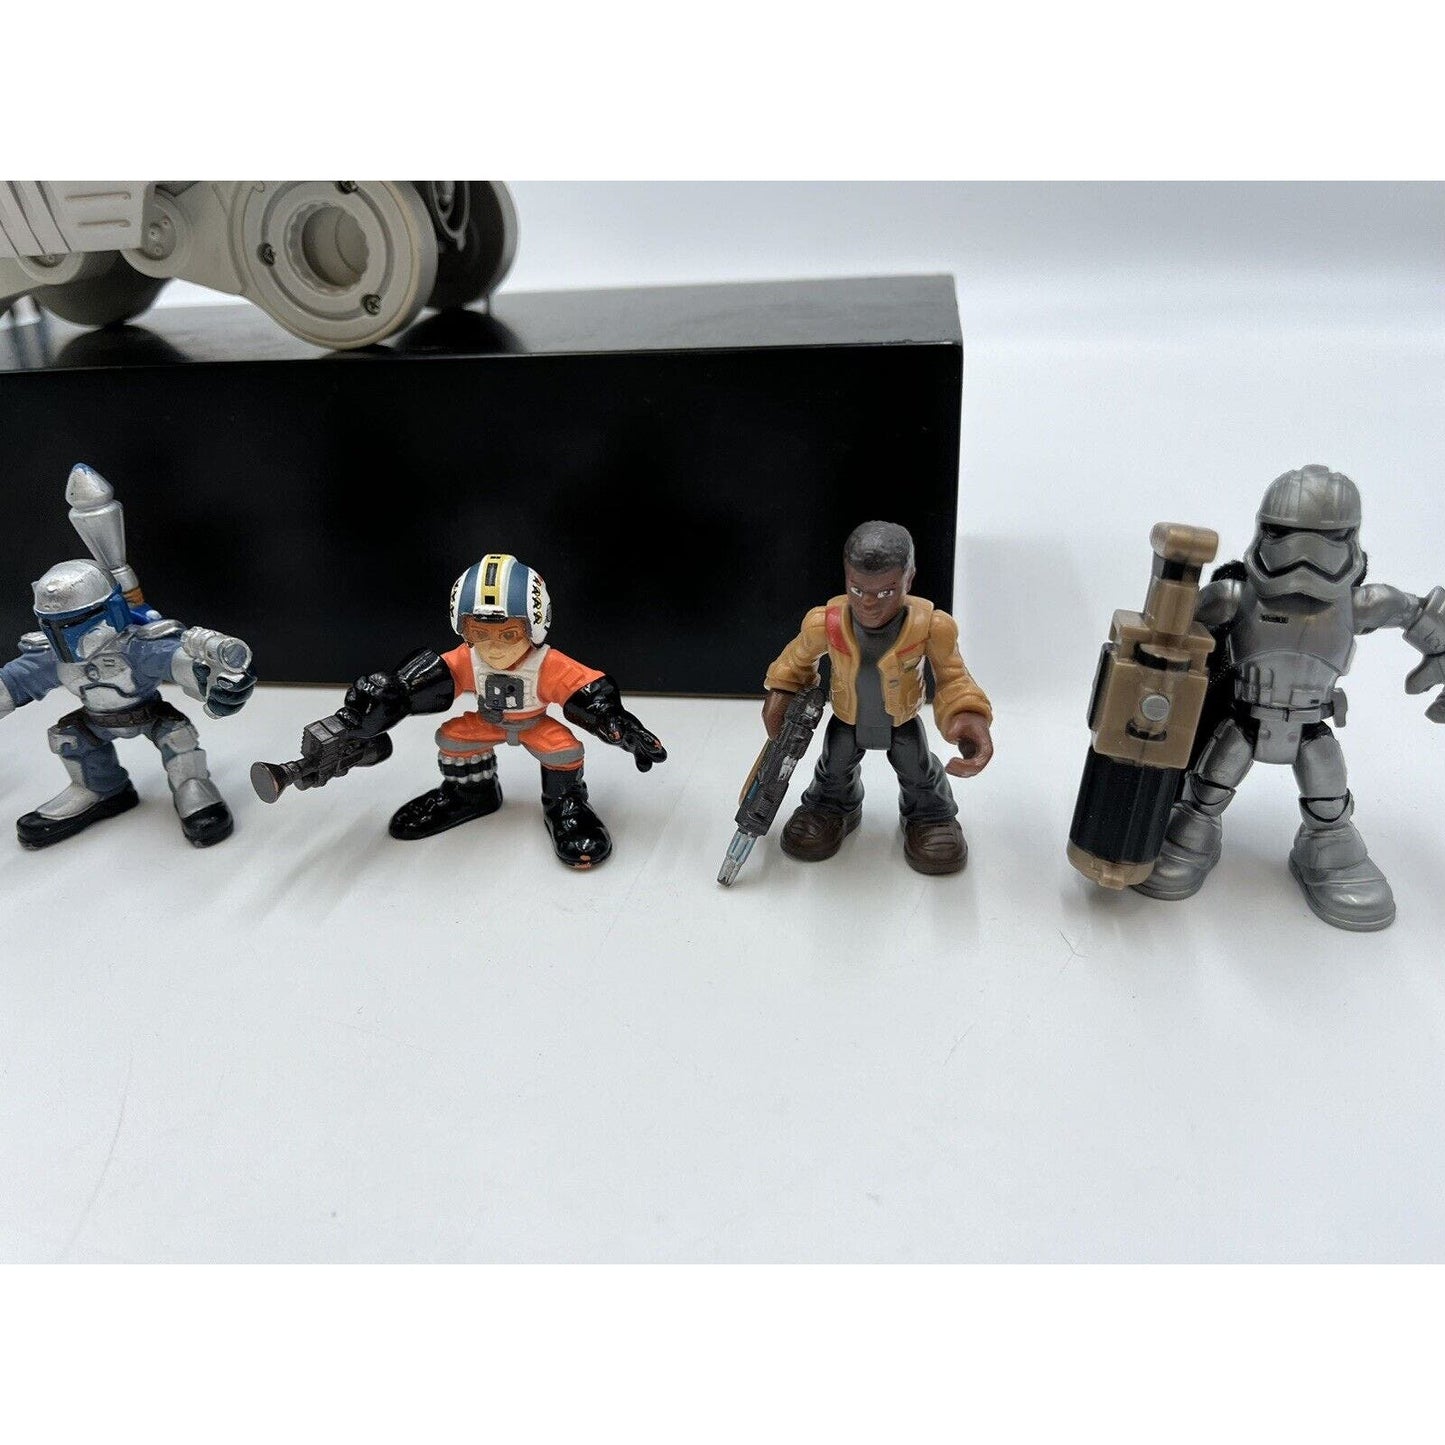 Hasbro Star Wars Galactic Heroes Imperial AT-AT Walker Toys R Us 2009 + Figures